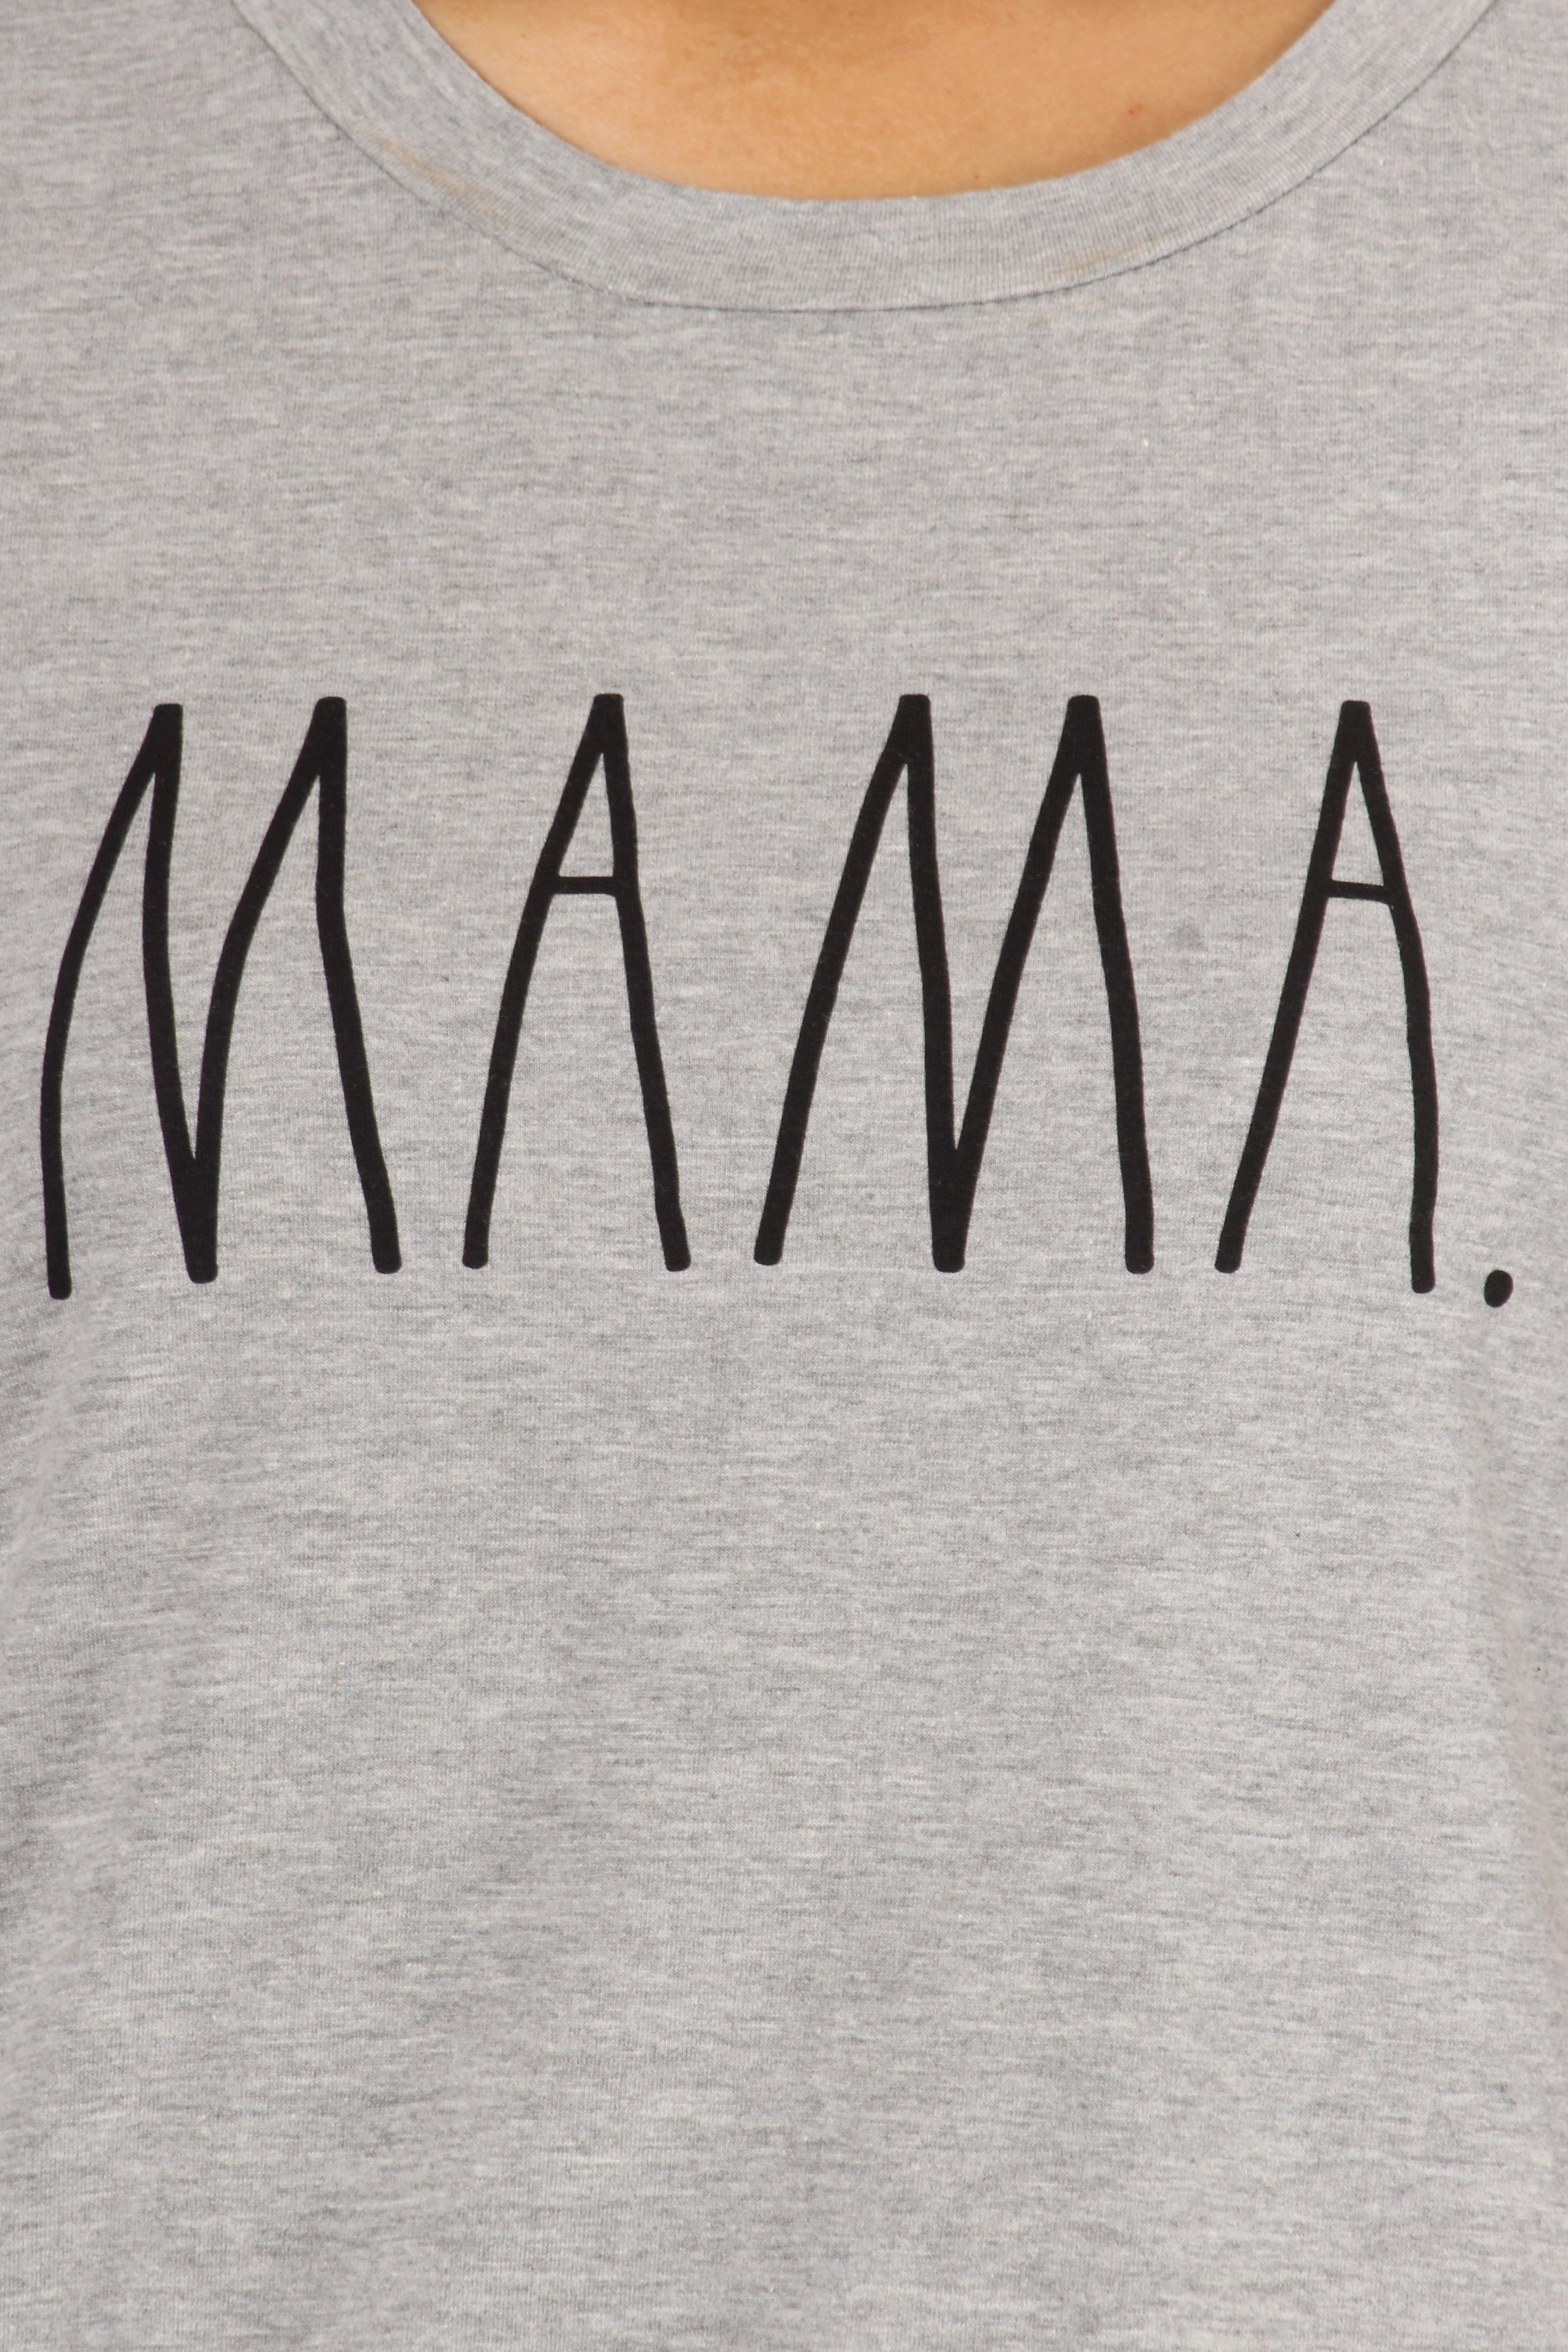 Women's "MAMA" Short Sleeve Icon T-Shirt - Rae Dunn Wear